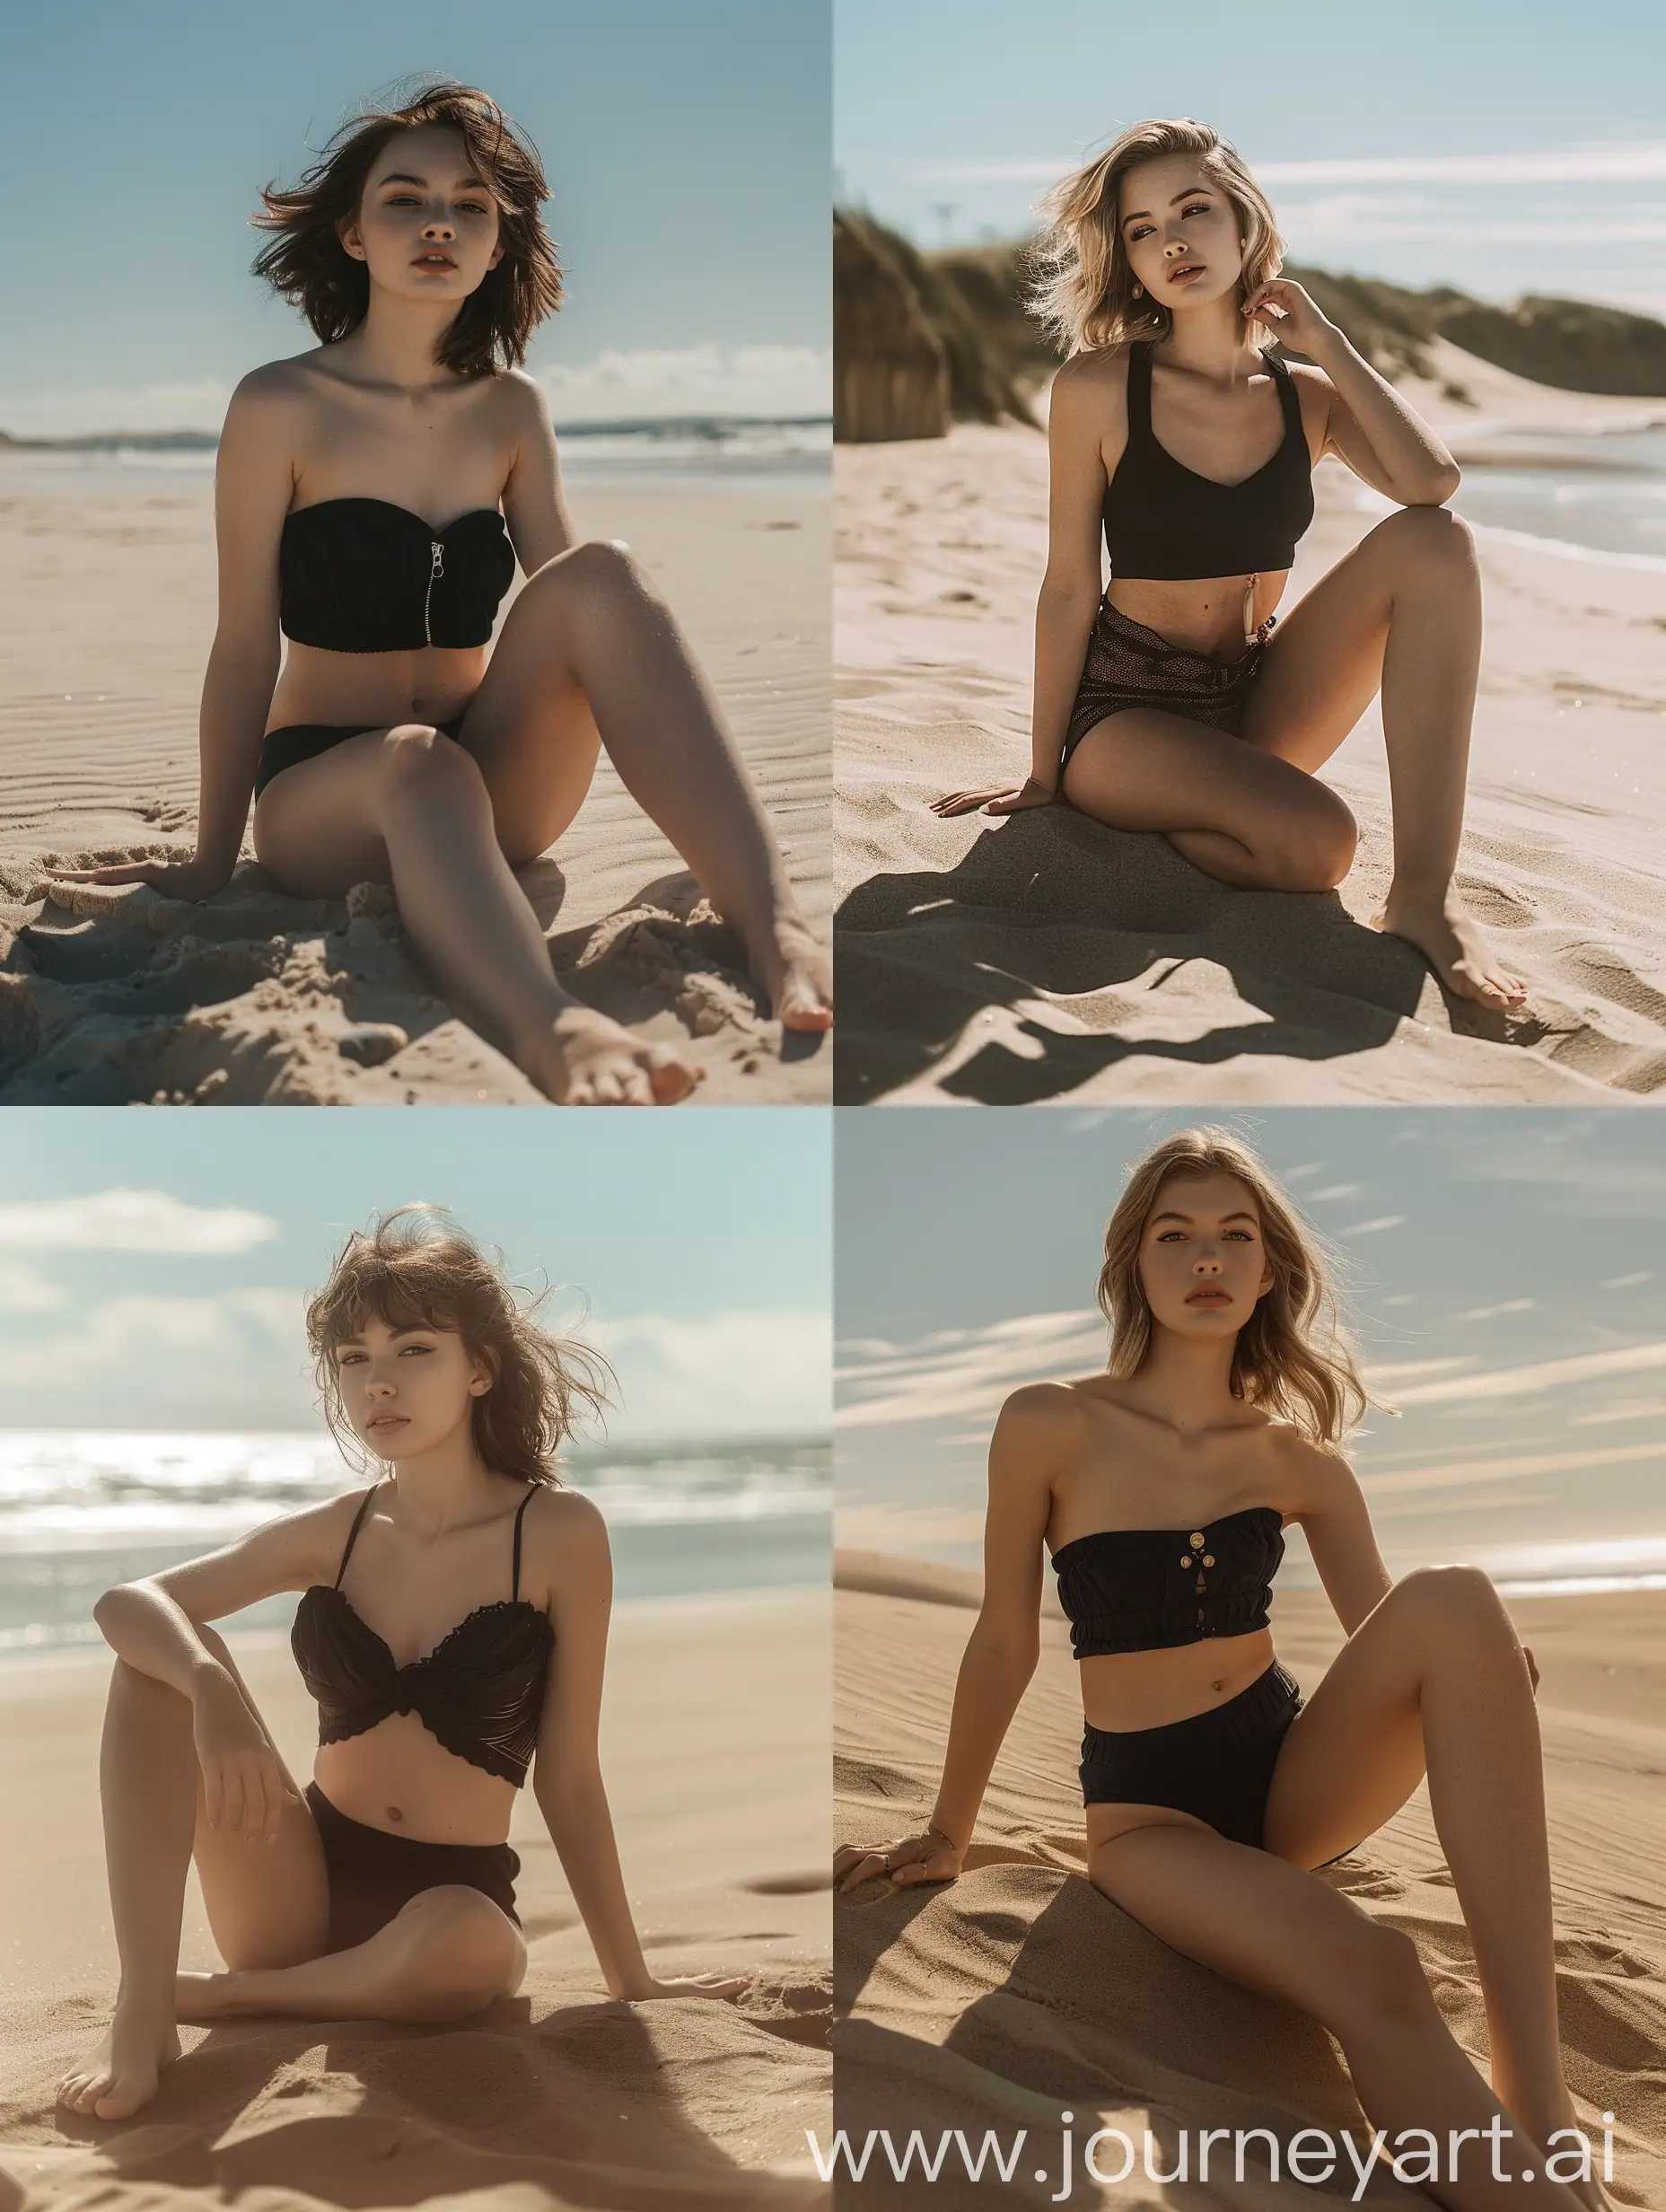 Professional-Model-Anya-Taylor-Joy-Posing-Gracefully-on-Beach-Sands